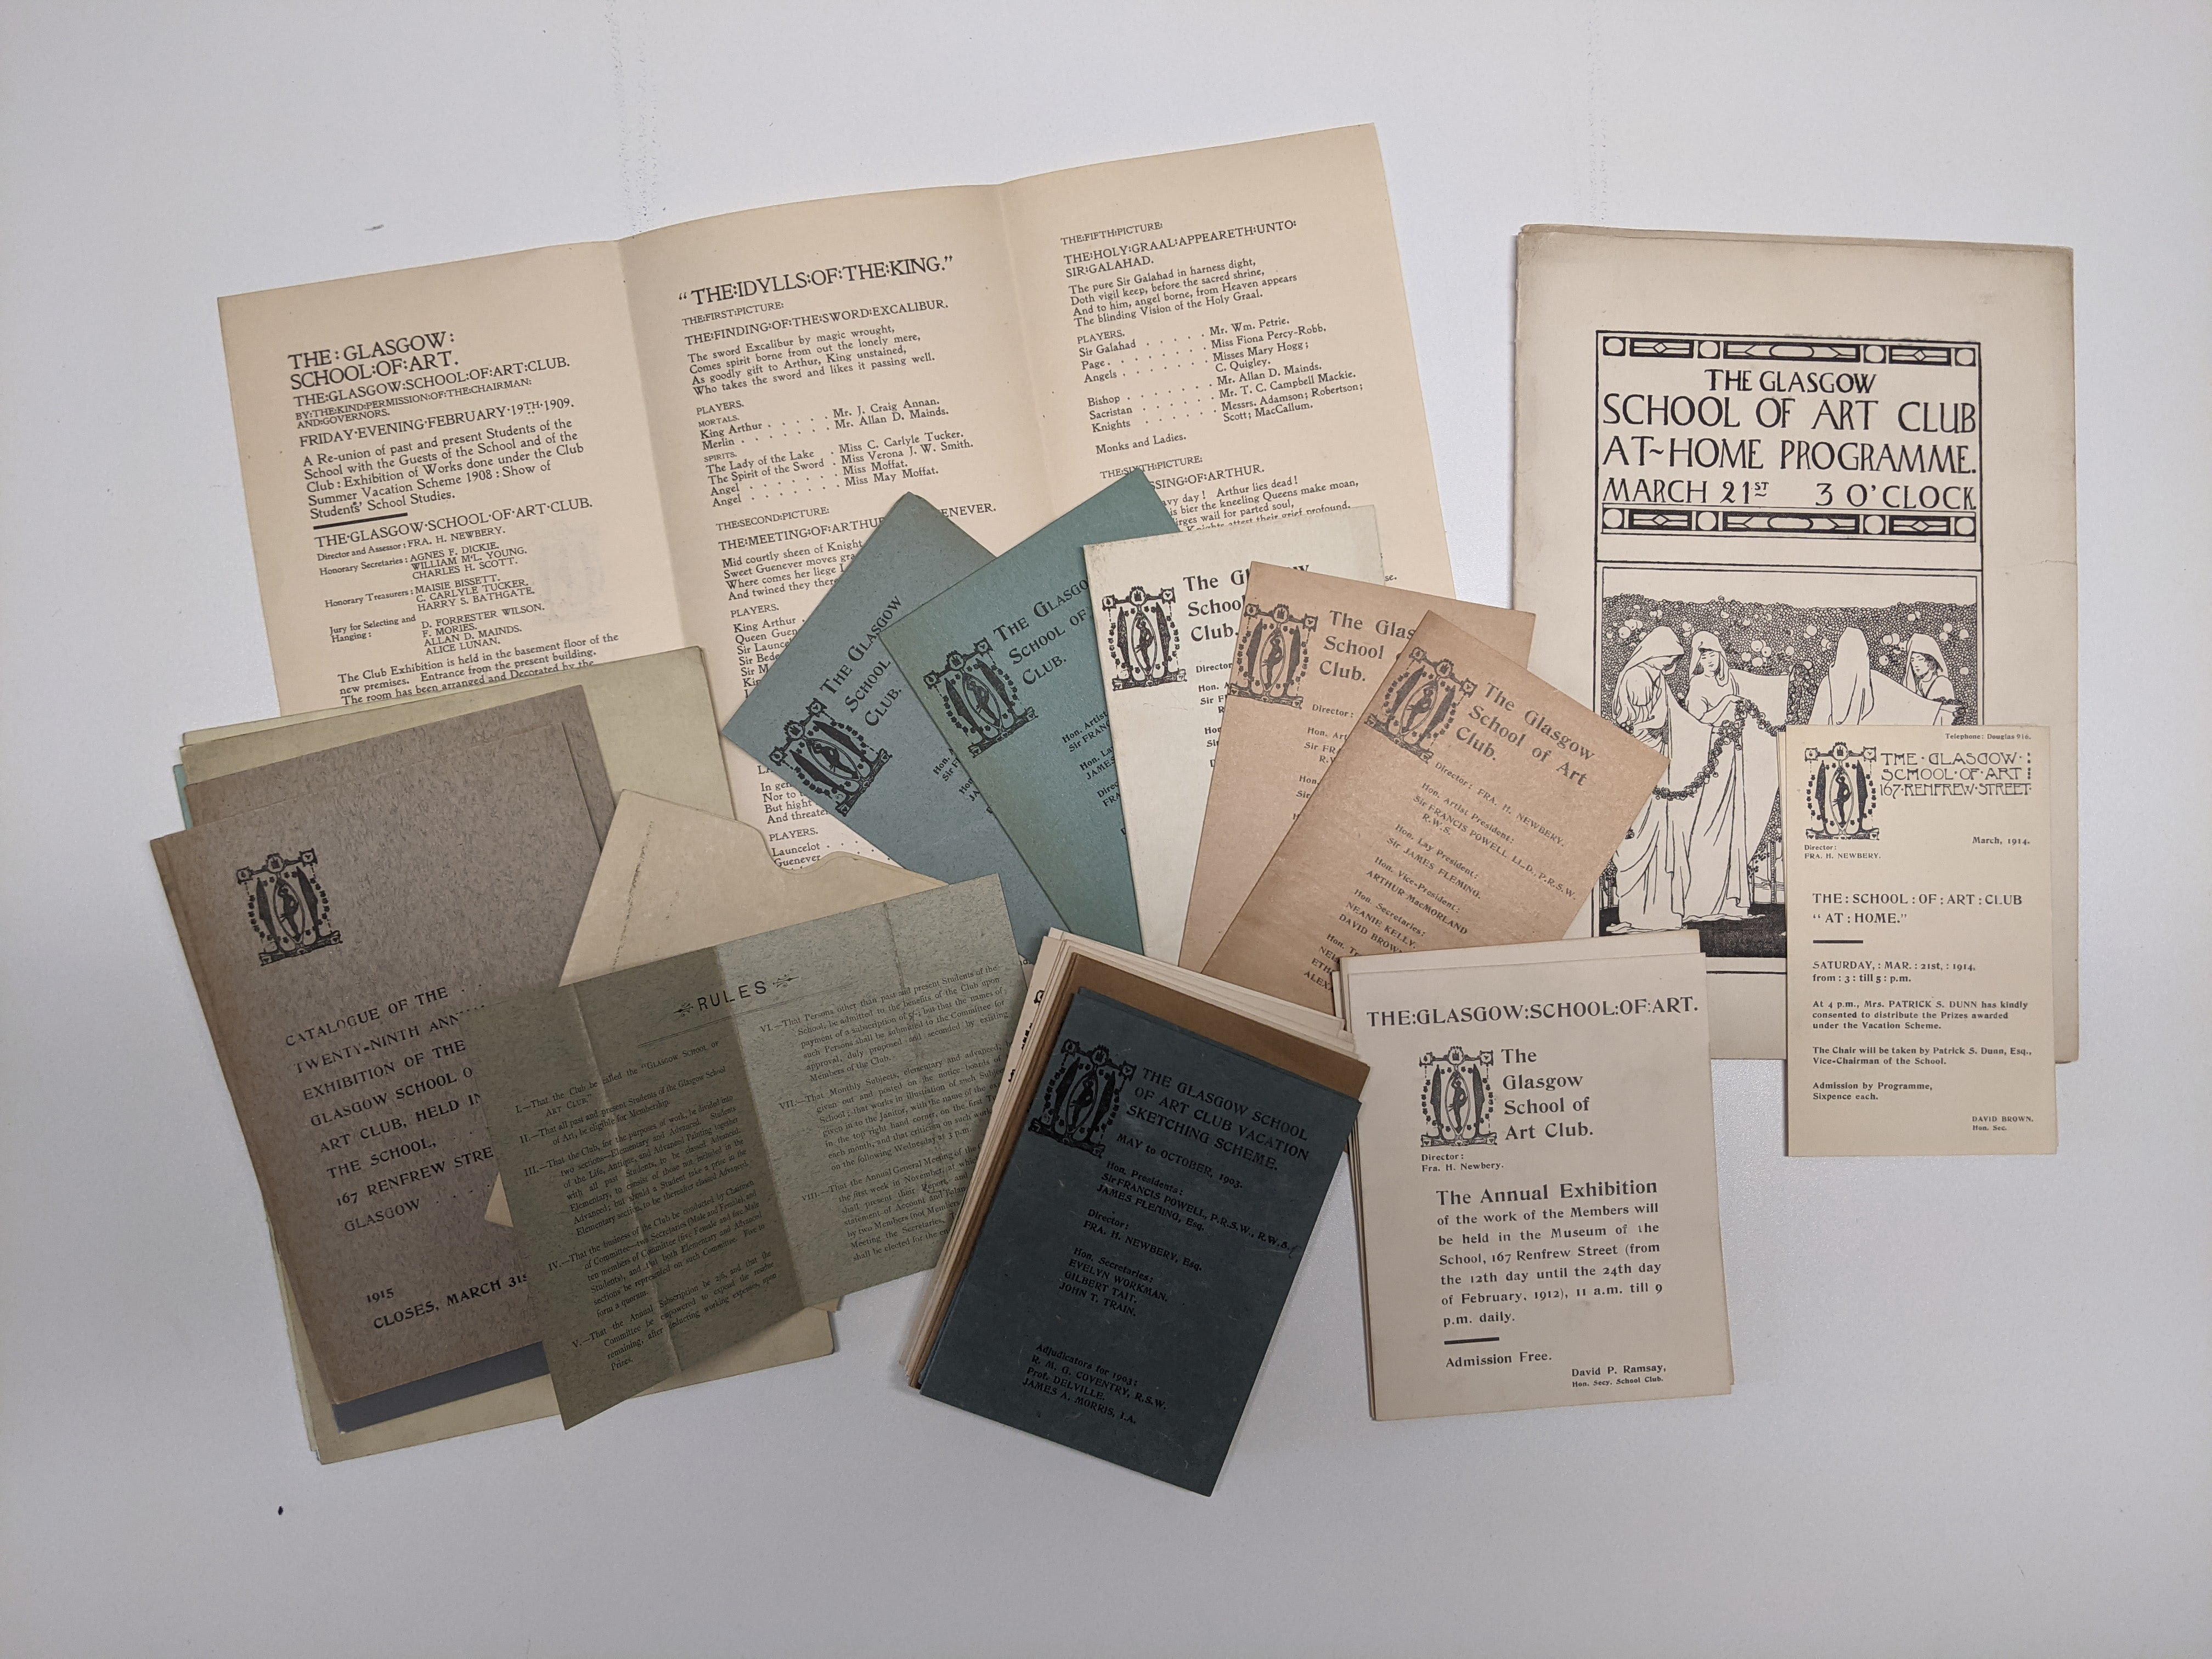 Student Activities · Records of The Glasgow School of Art Club · c1900-1950